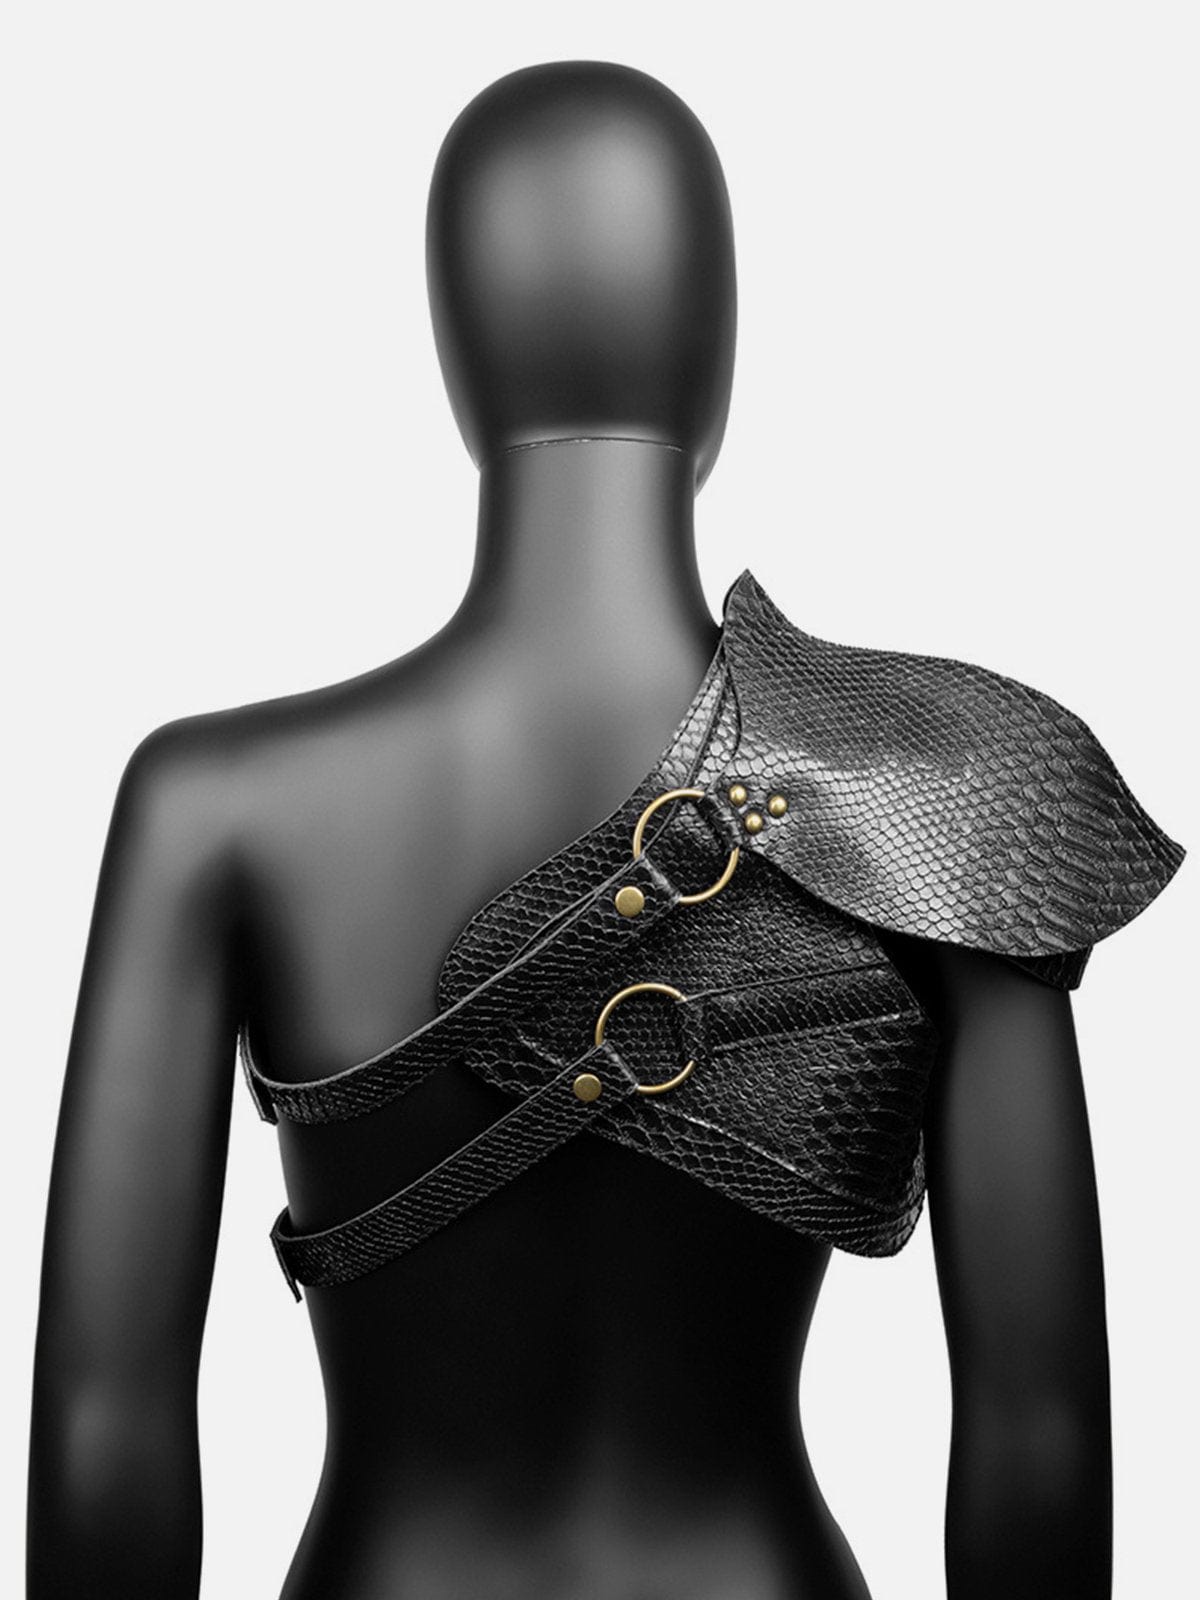 NEV Imitation Leather Armor Button Cape